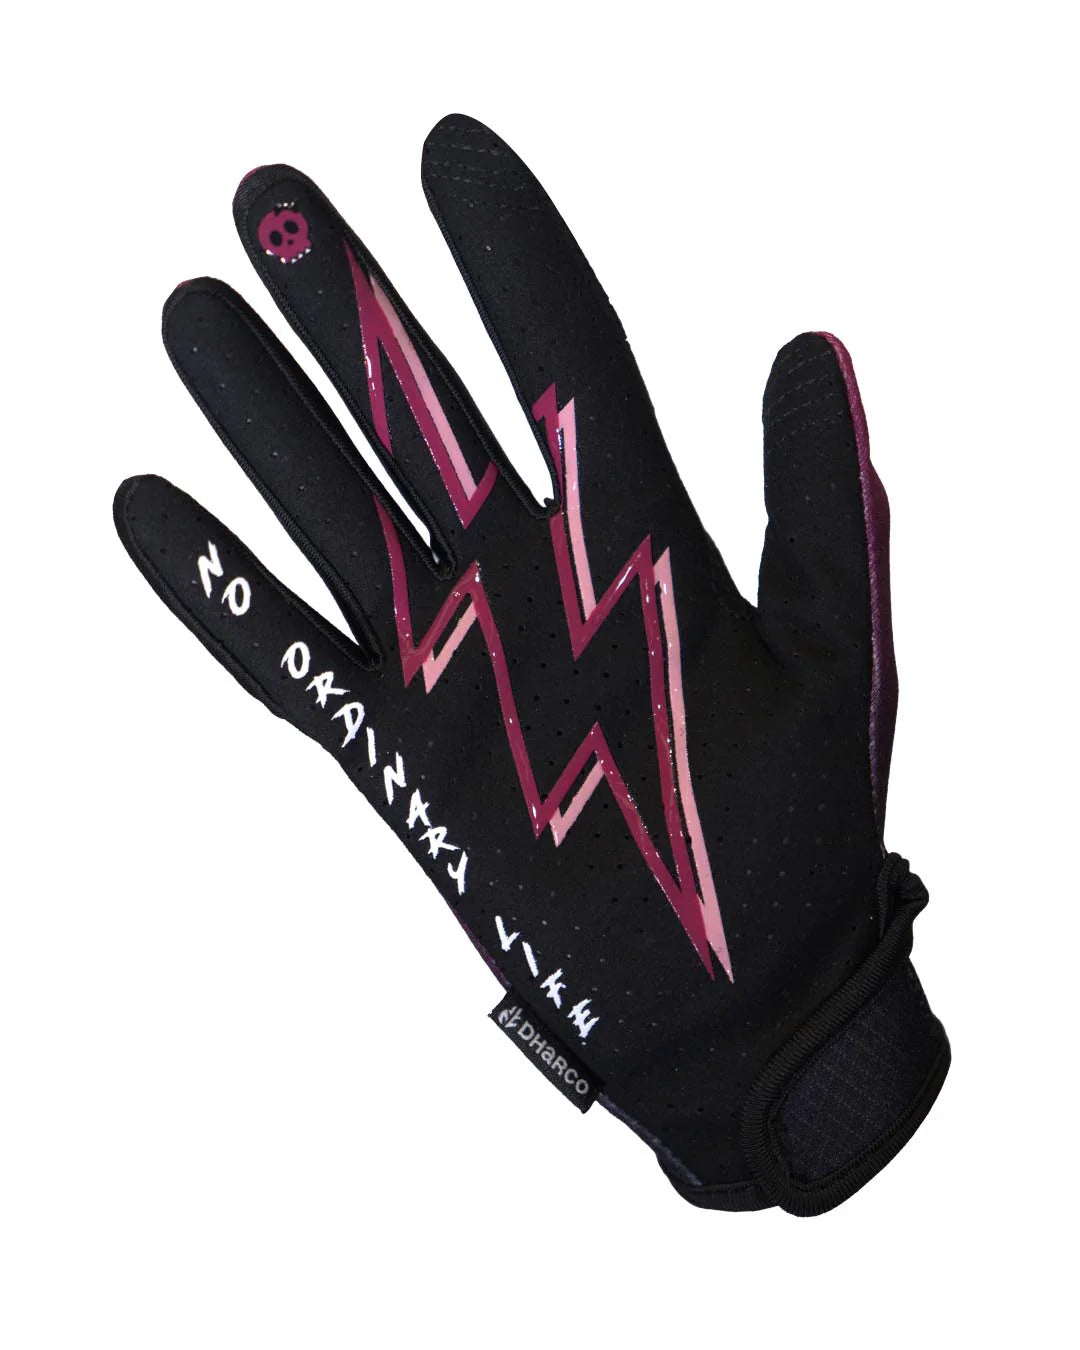 DHaRCO Womens Race Glove